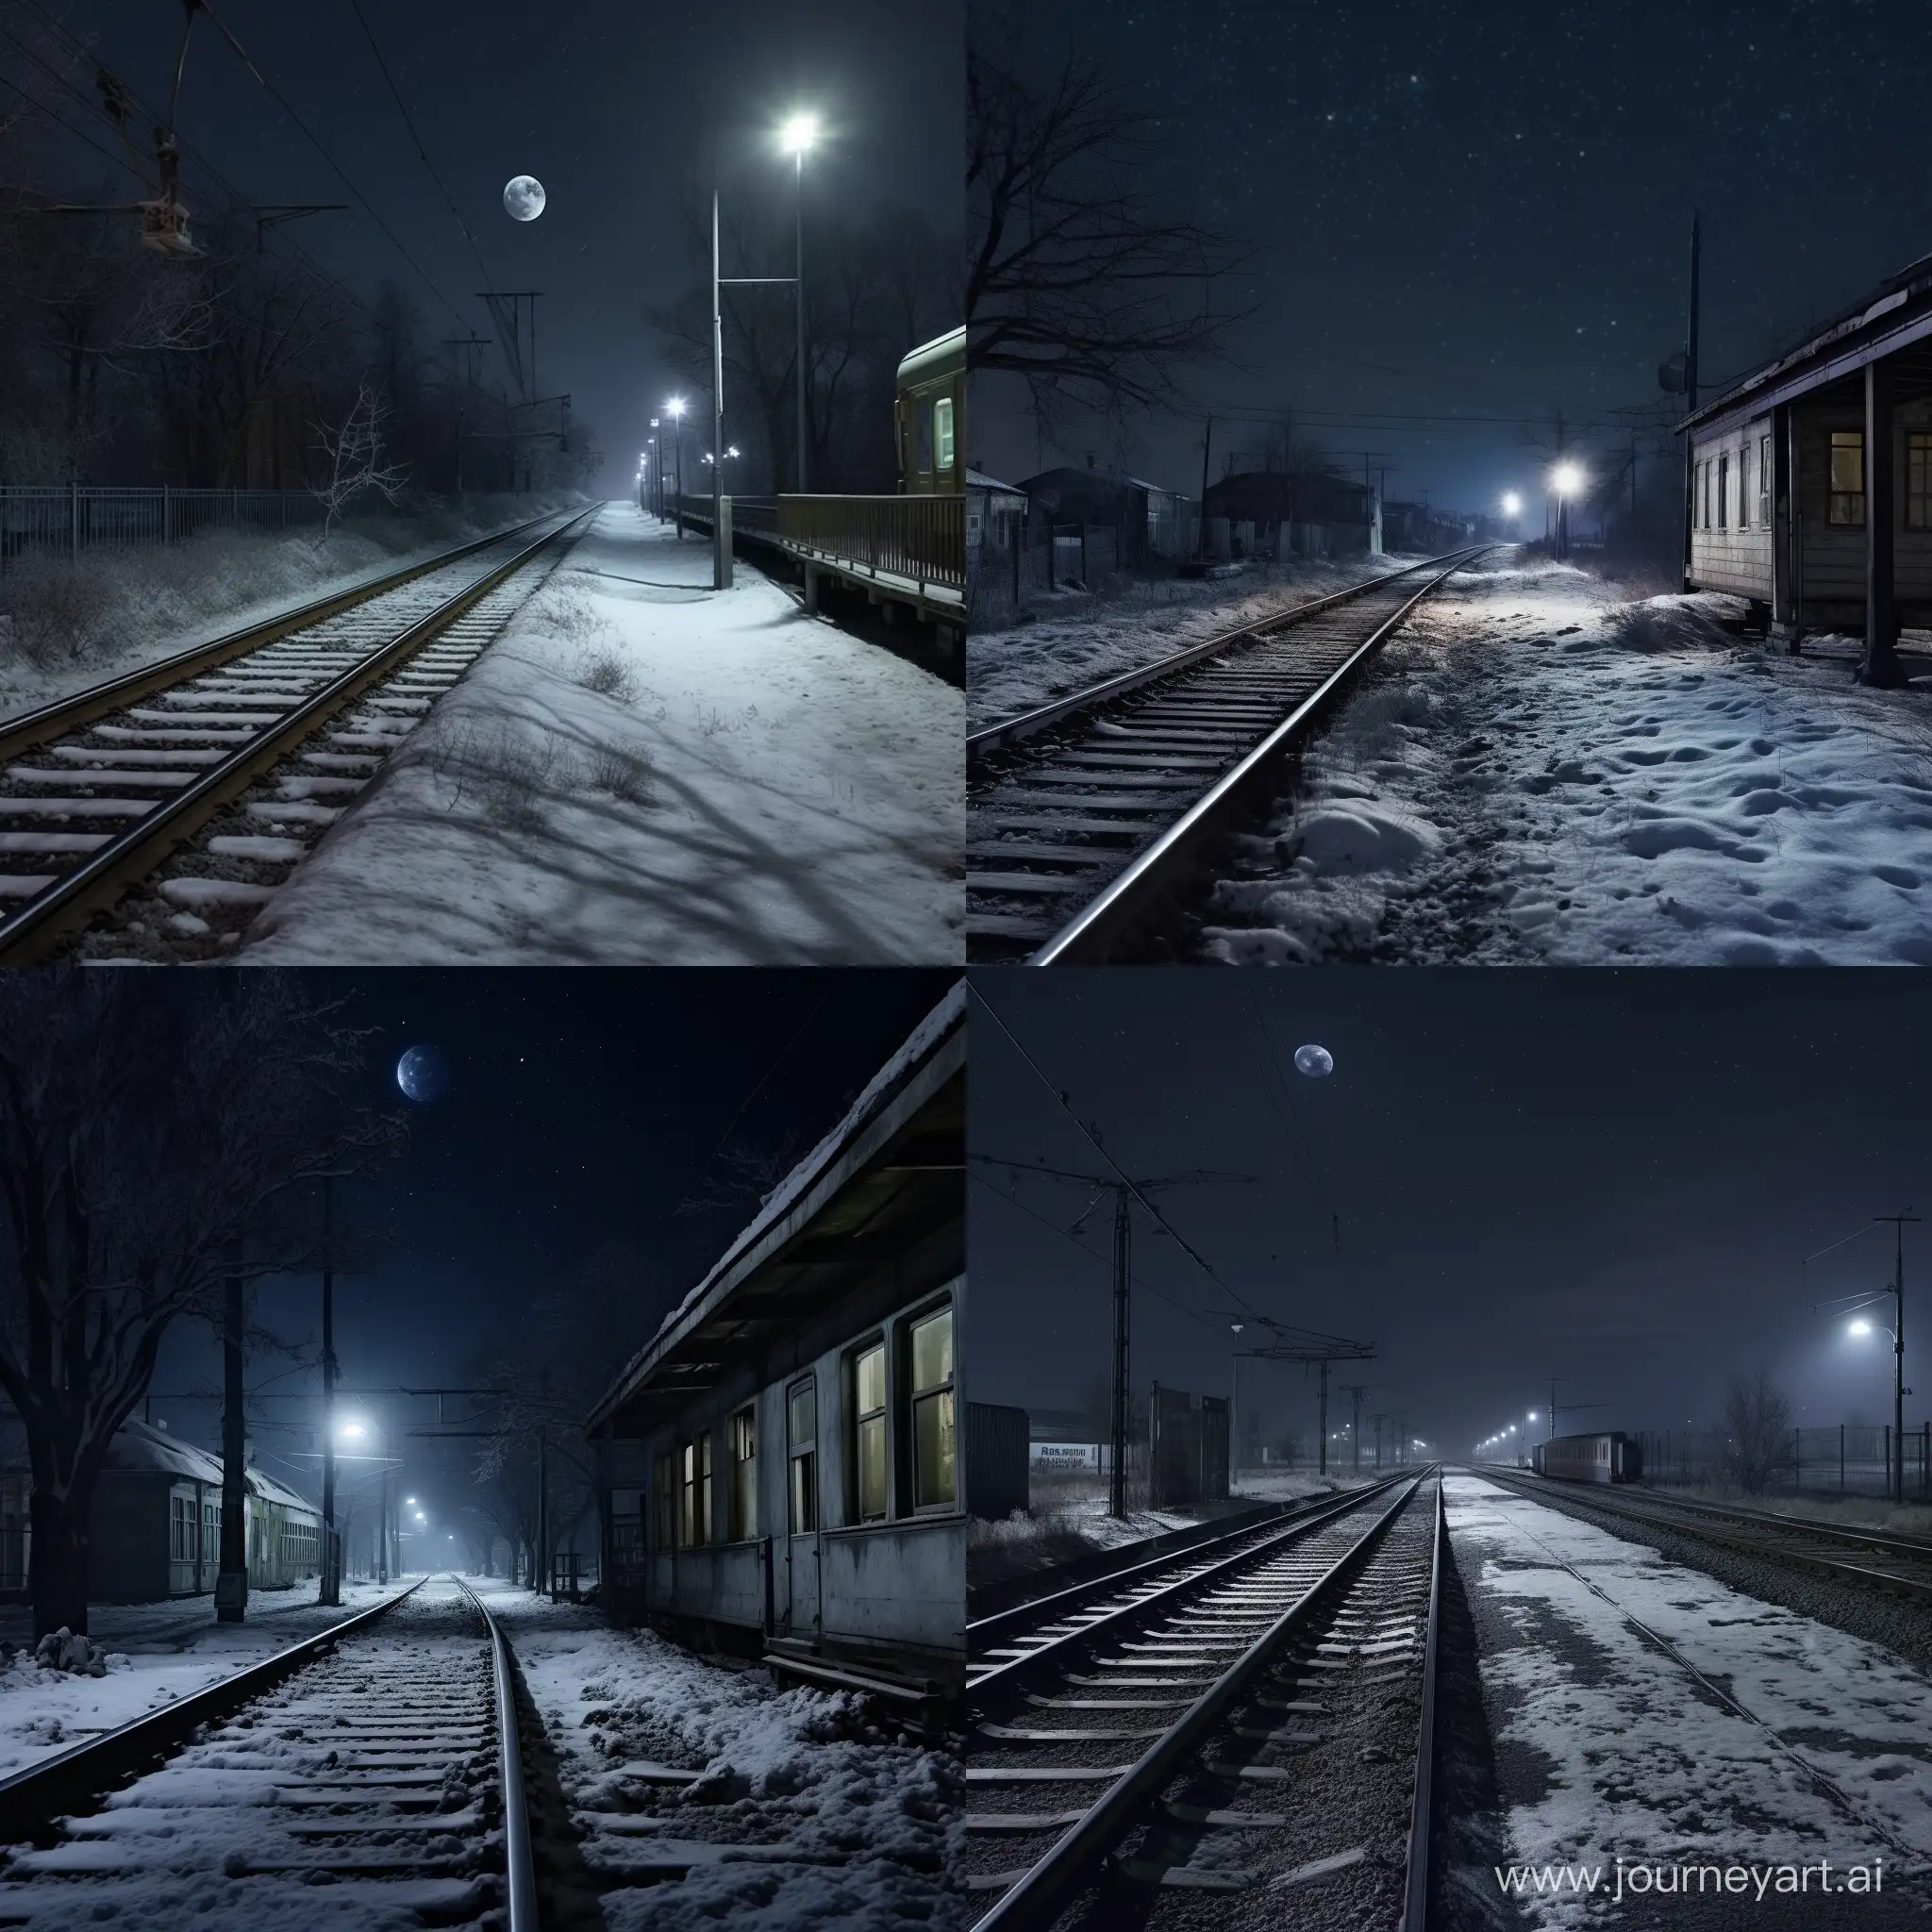 SnowCovered-Railway-Platform-in-Russian-Hinterlands-at-Night